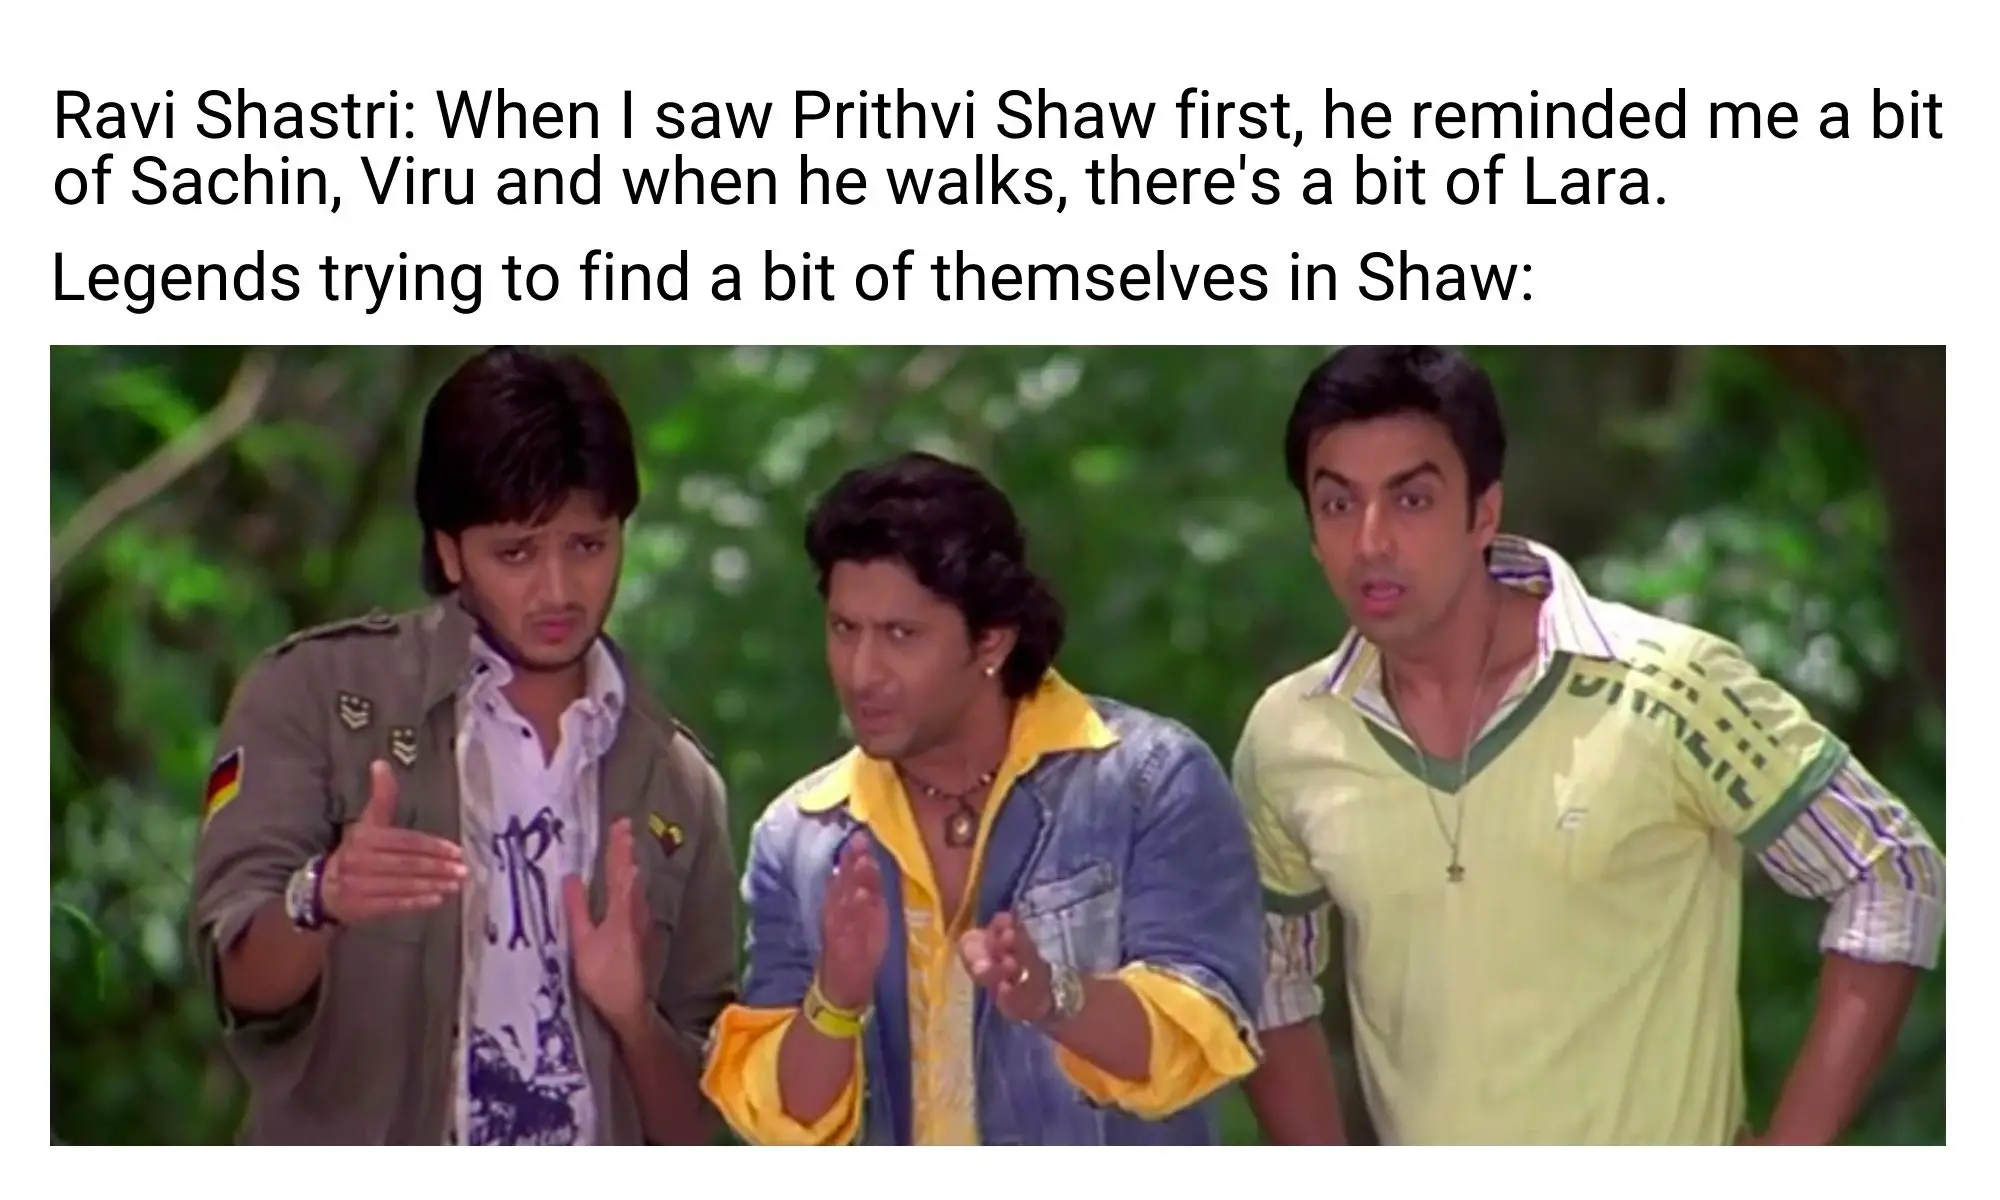 Prithvi Shaw meme on Ravi Shastri